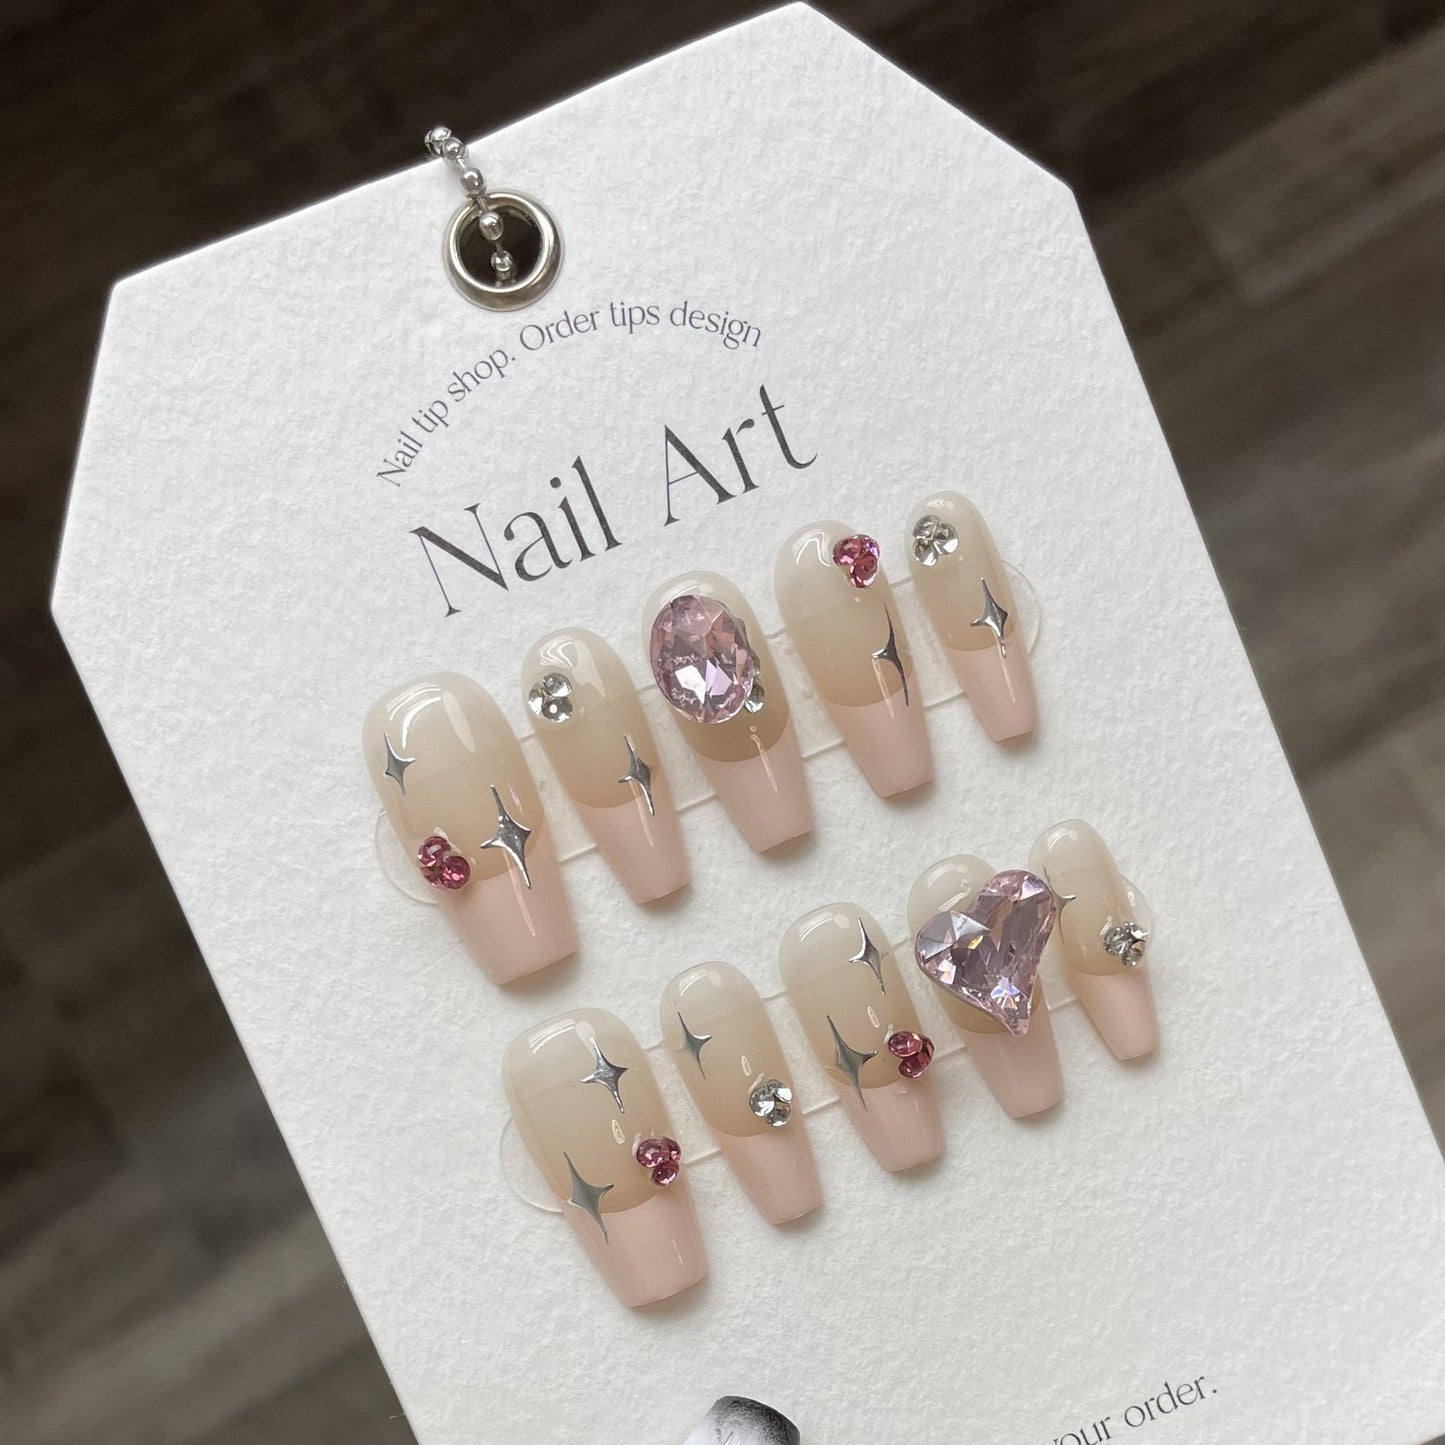 895 Star style press on nagels 100% handgemaakte kunstnagels nude kleur roze